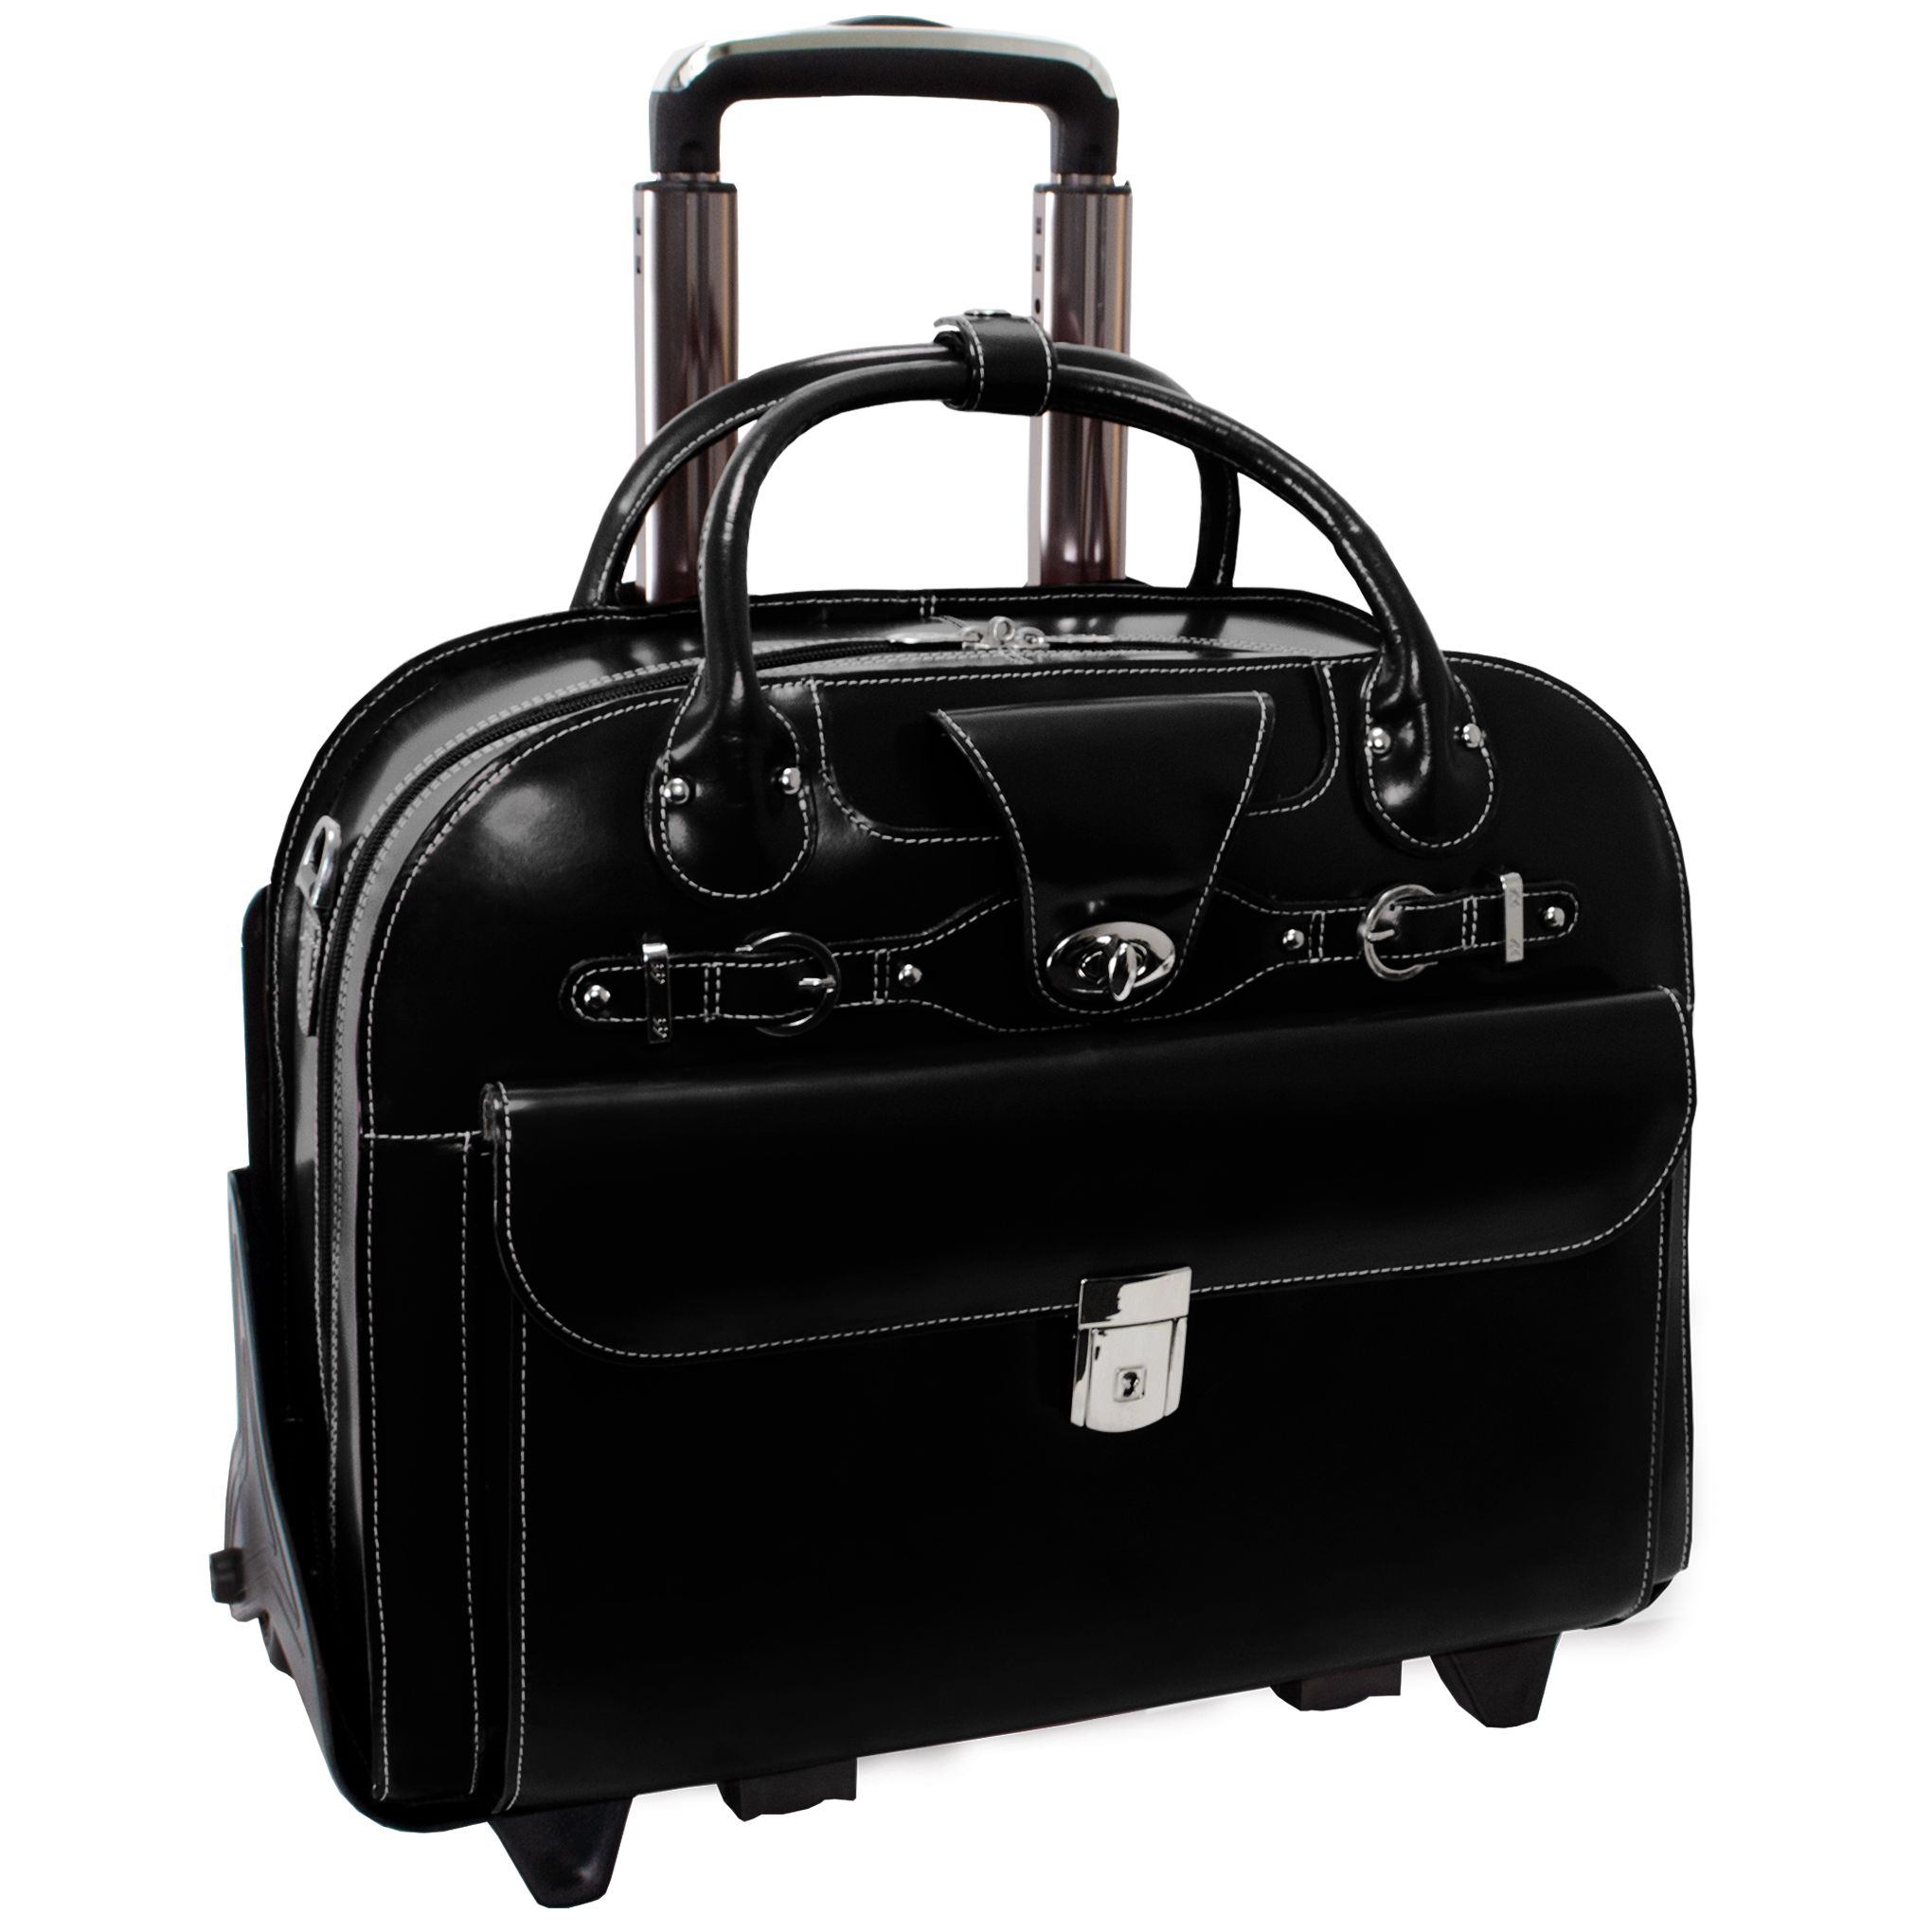 Roseville - Black Leather Ladies Briefcase